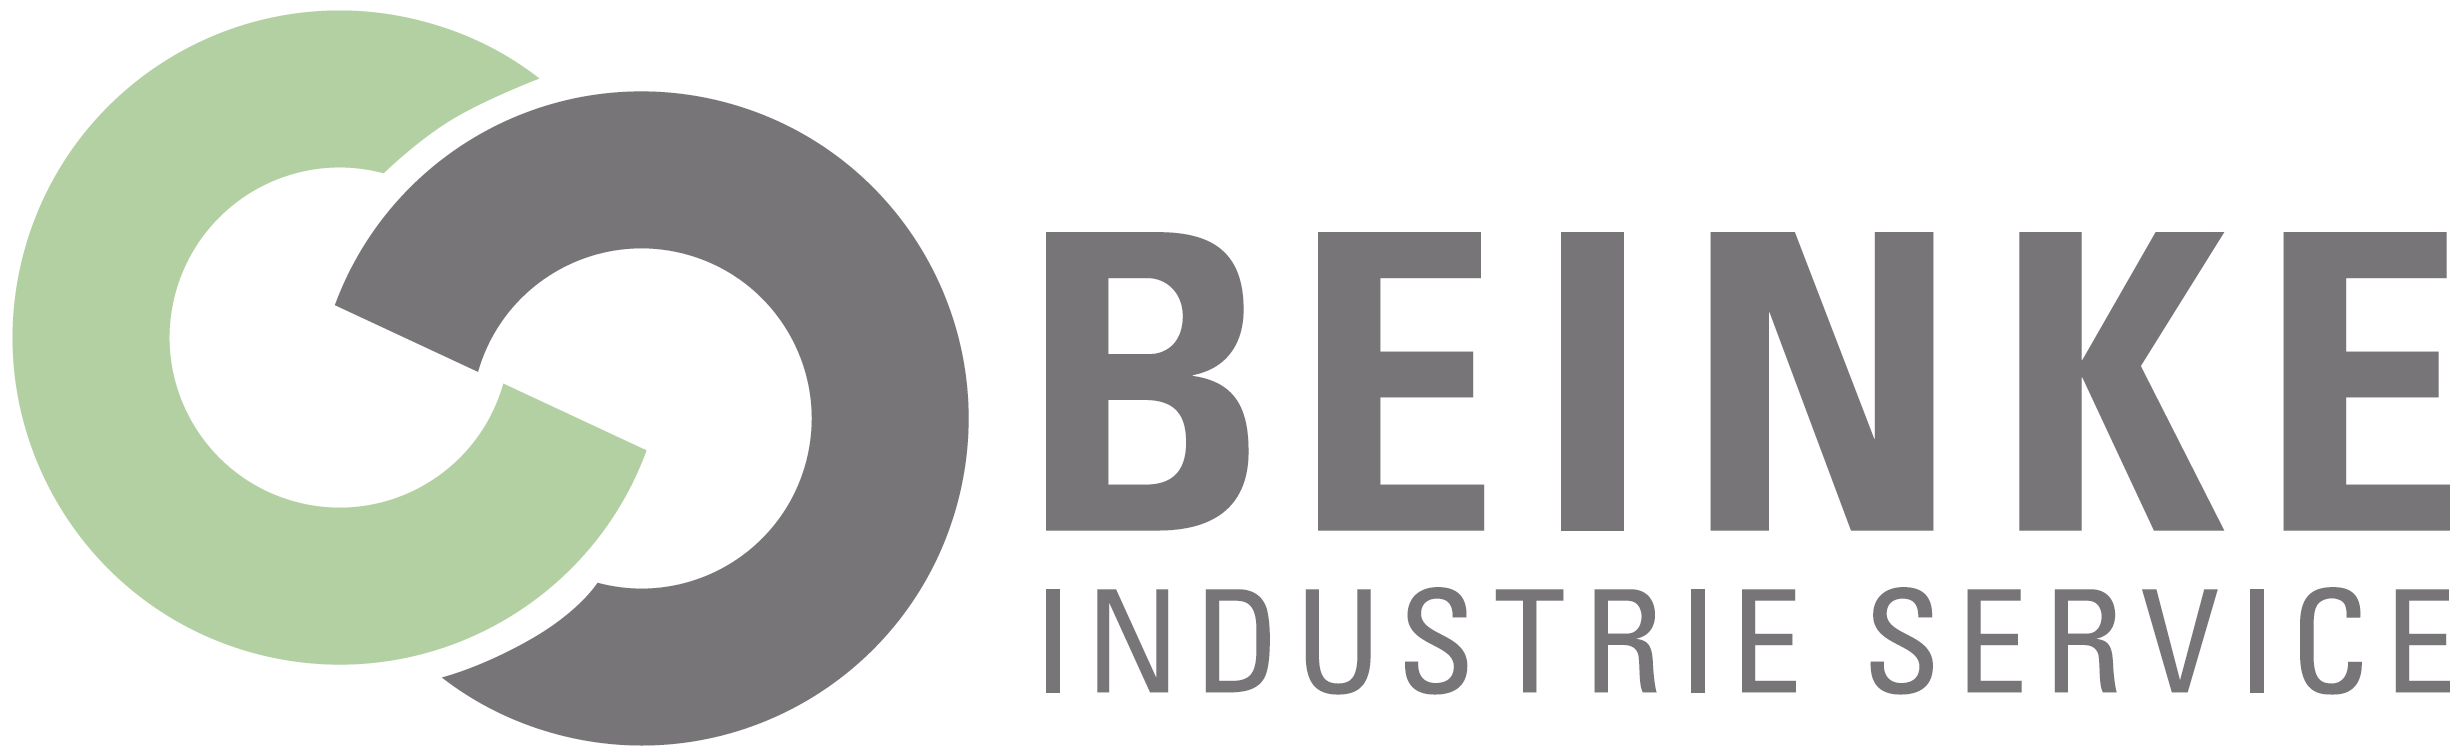 Beinke-Industrie-Service GmbH & Co. KG